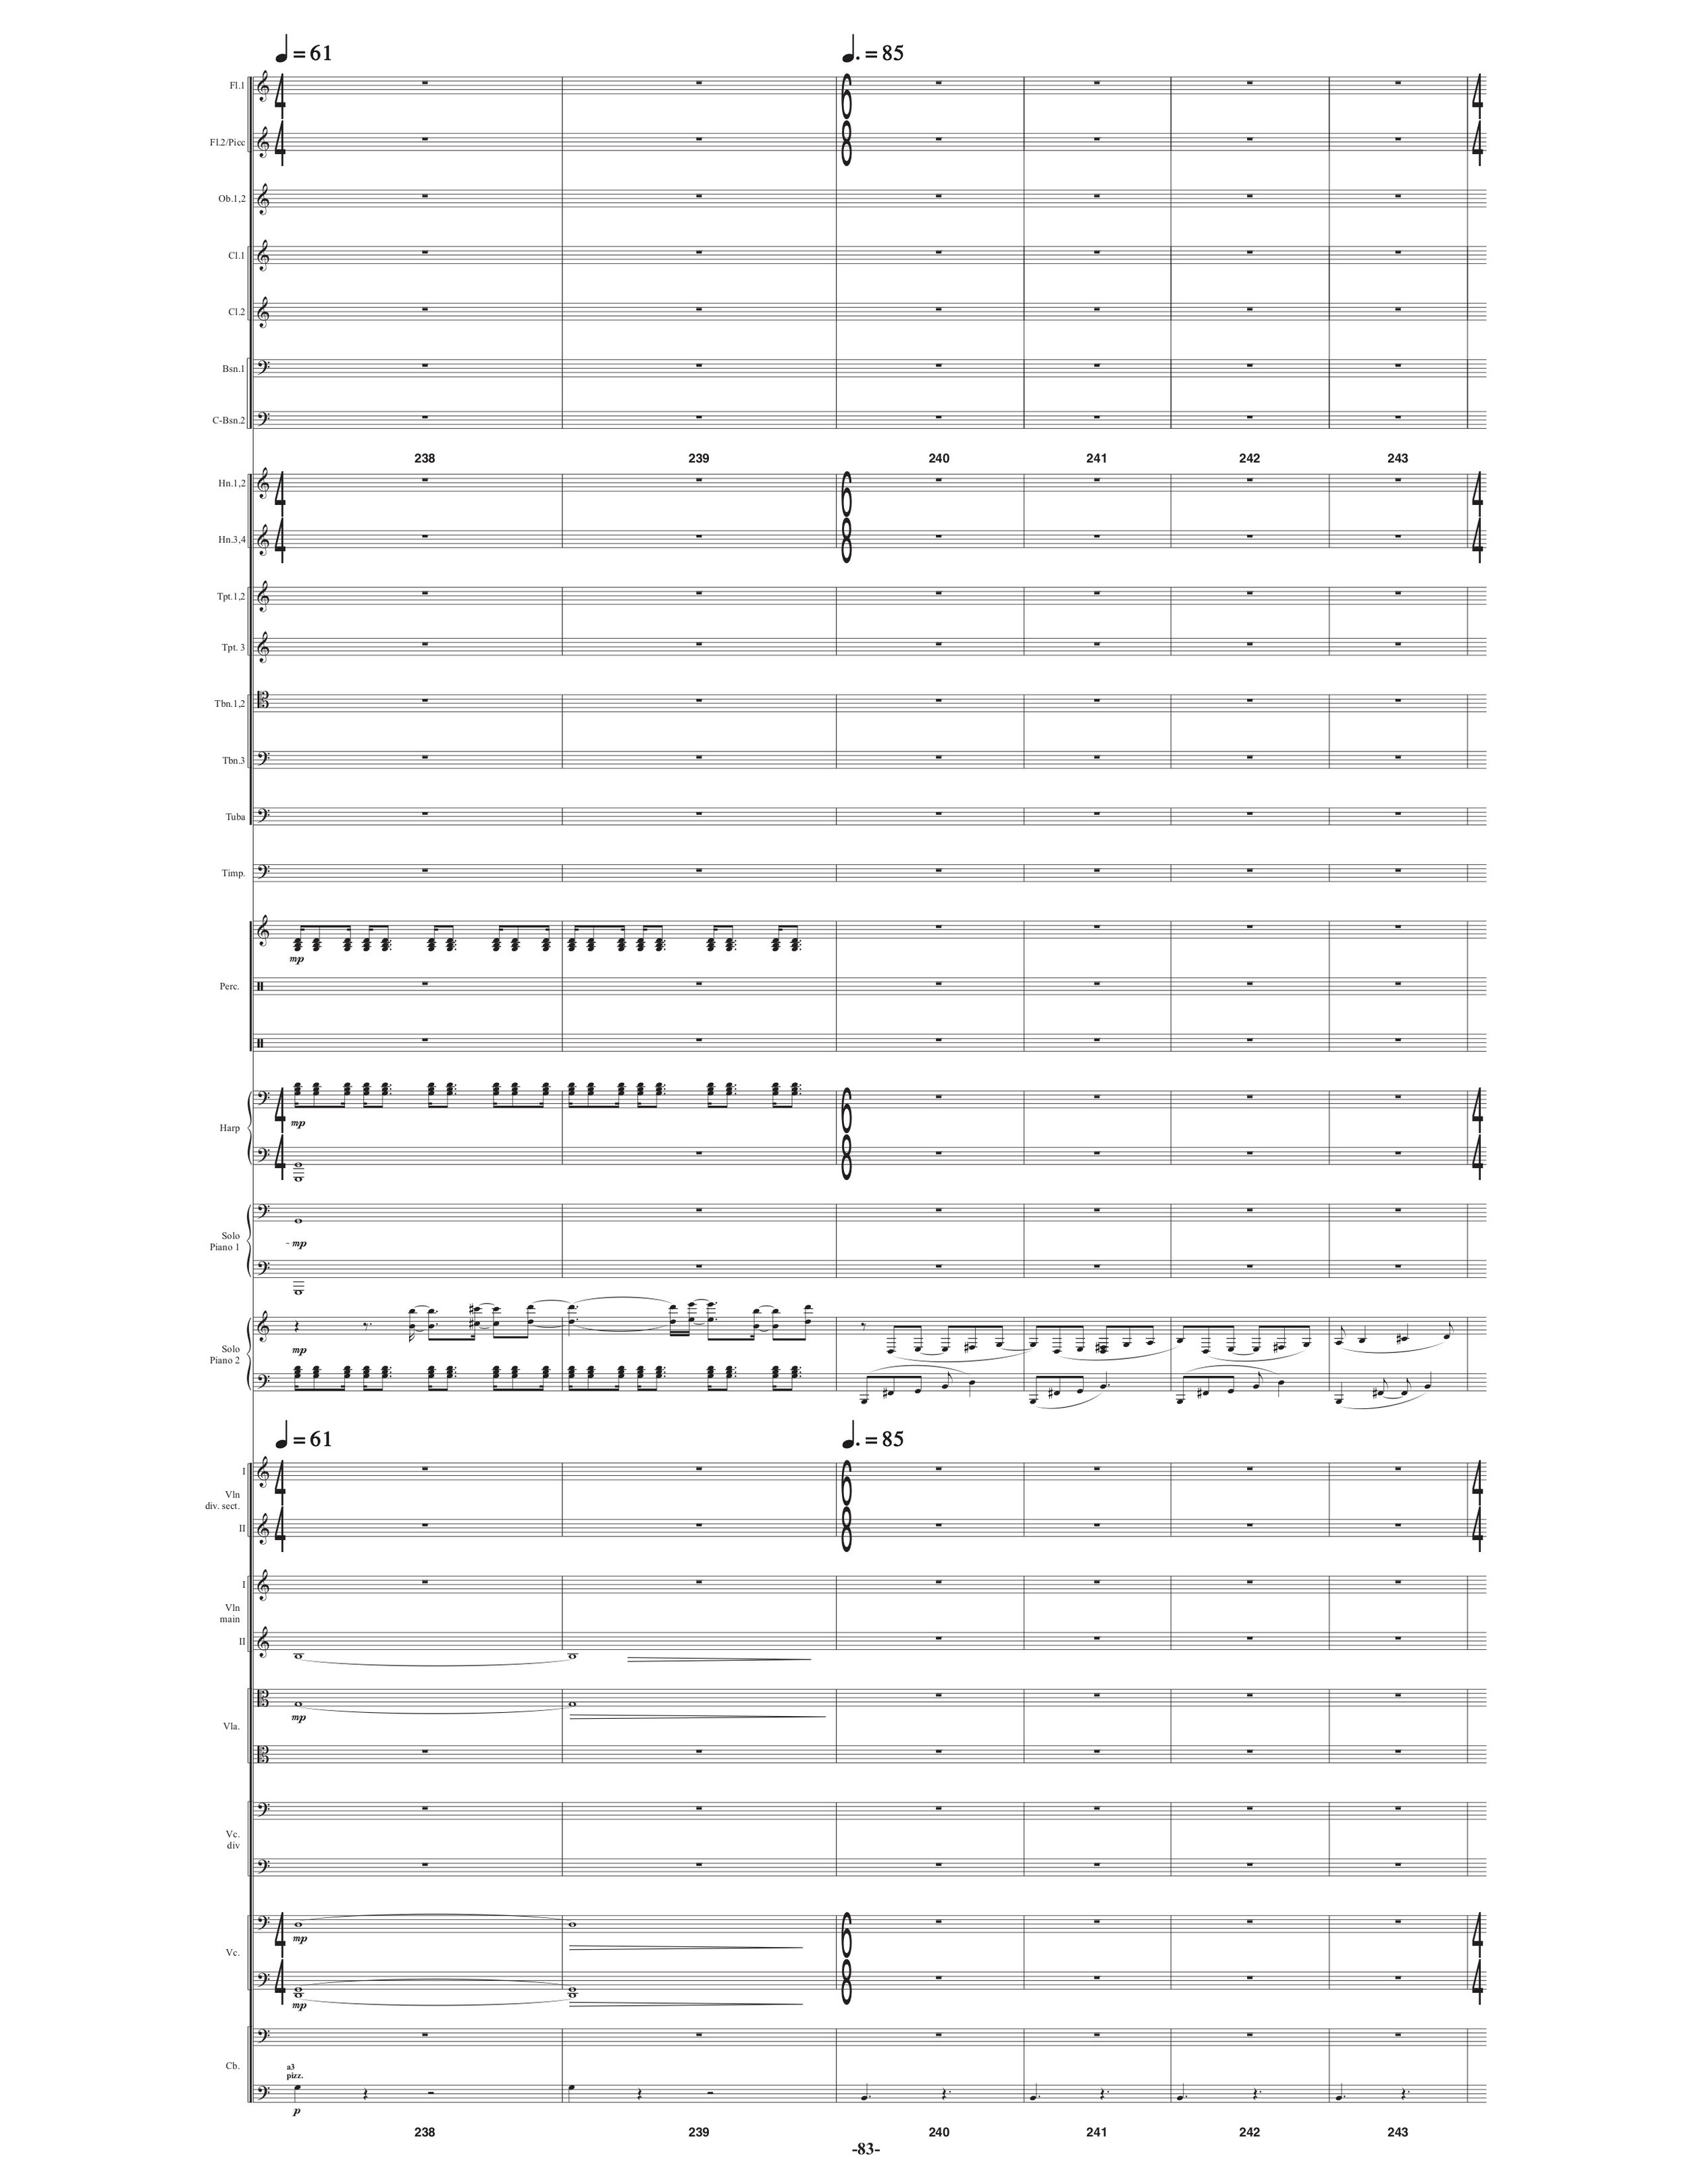 Symphony_Orch & 2 Pianos p88.jpg